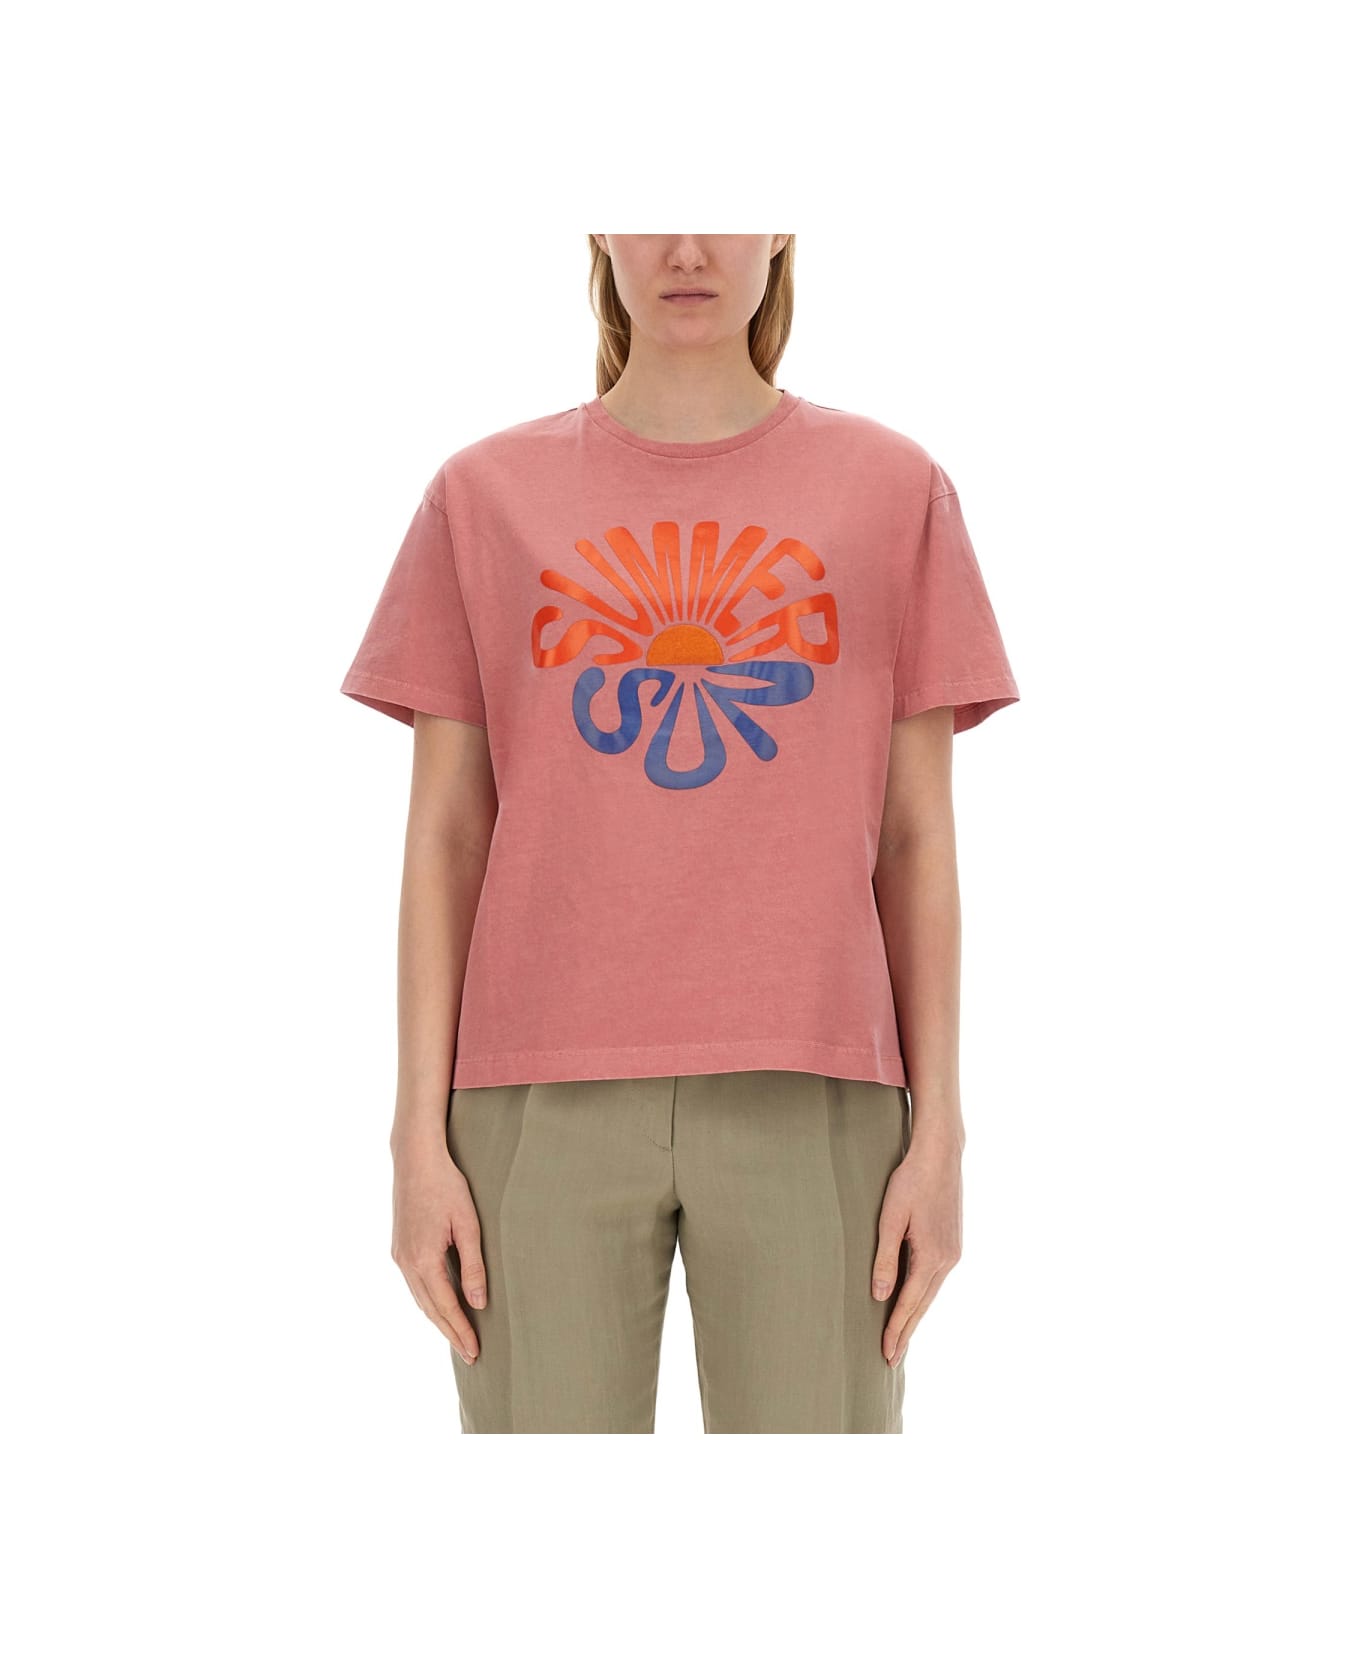 PS by Paul Smith Summer Sun Print T-shirt - PINK